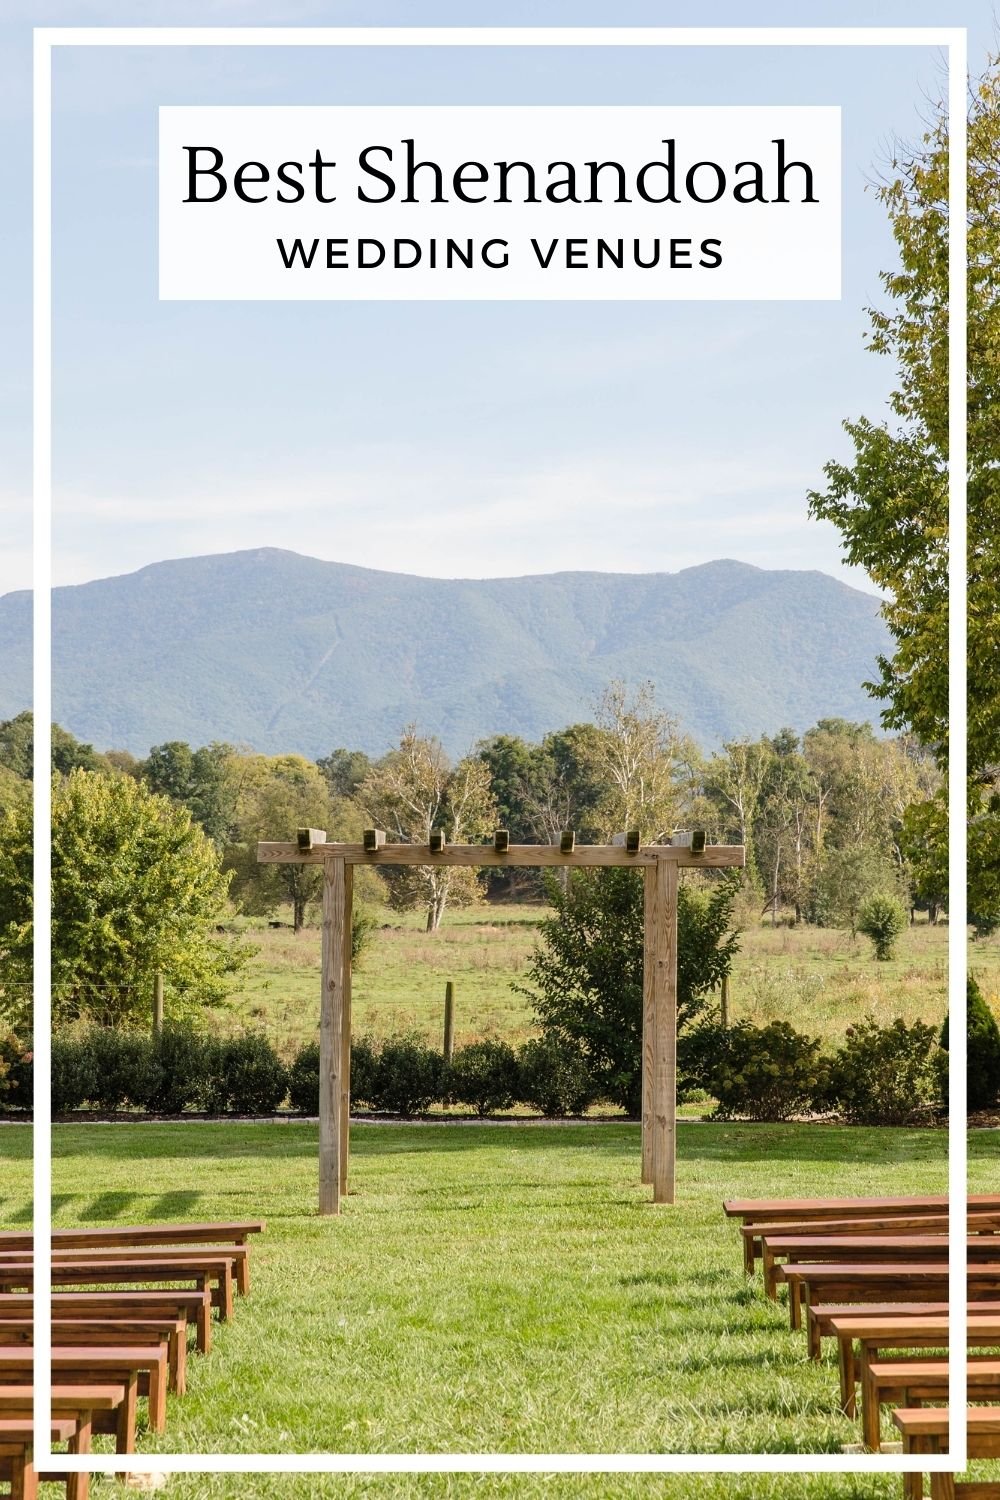 Best wedding venues in Shenandoah